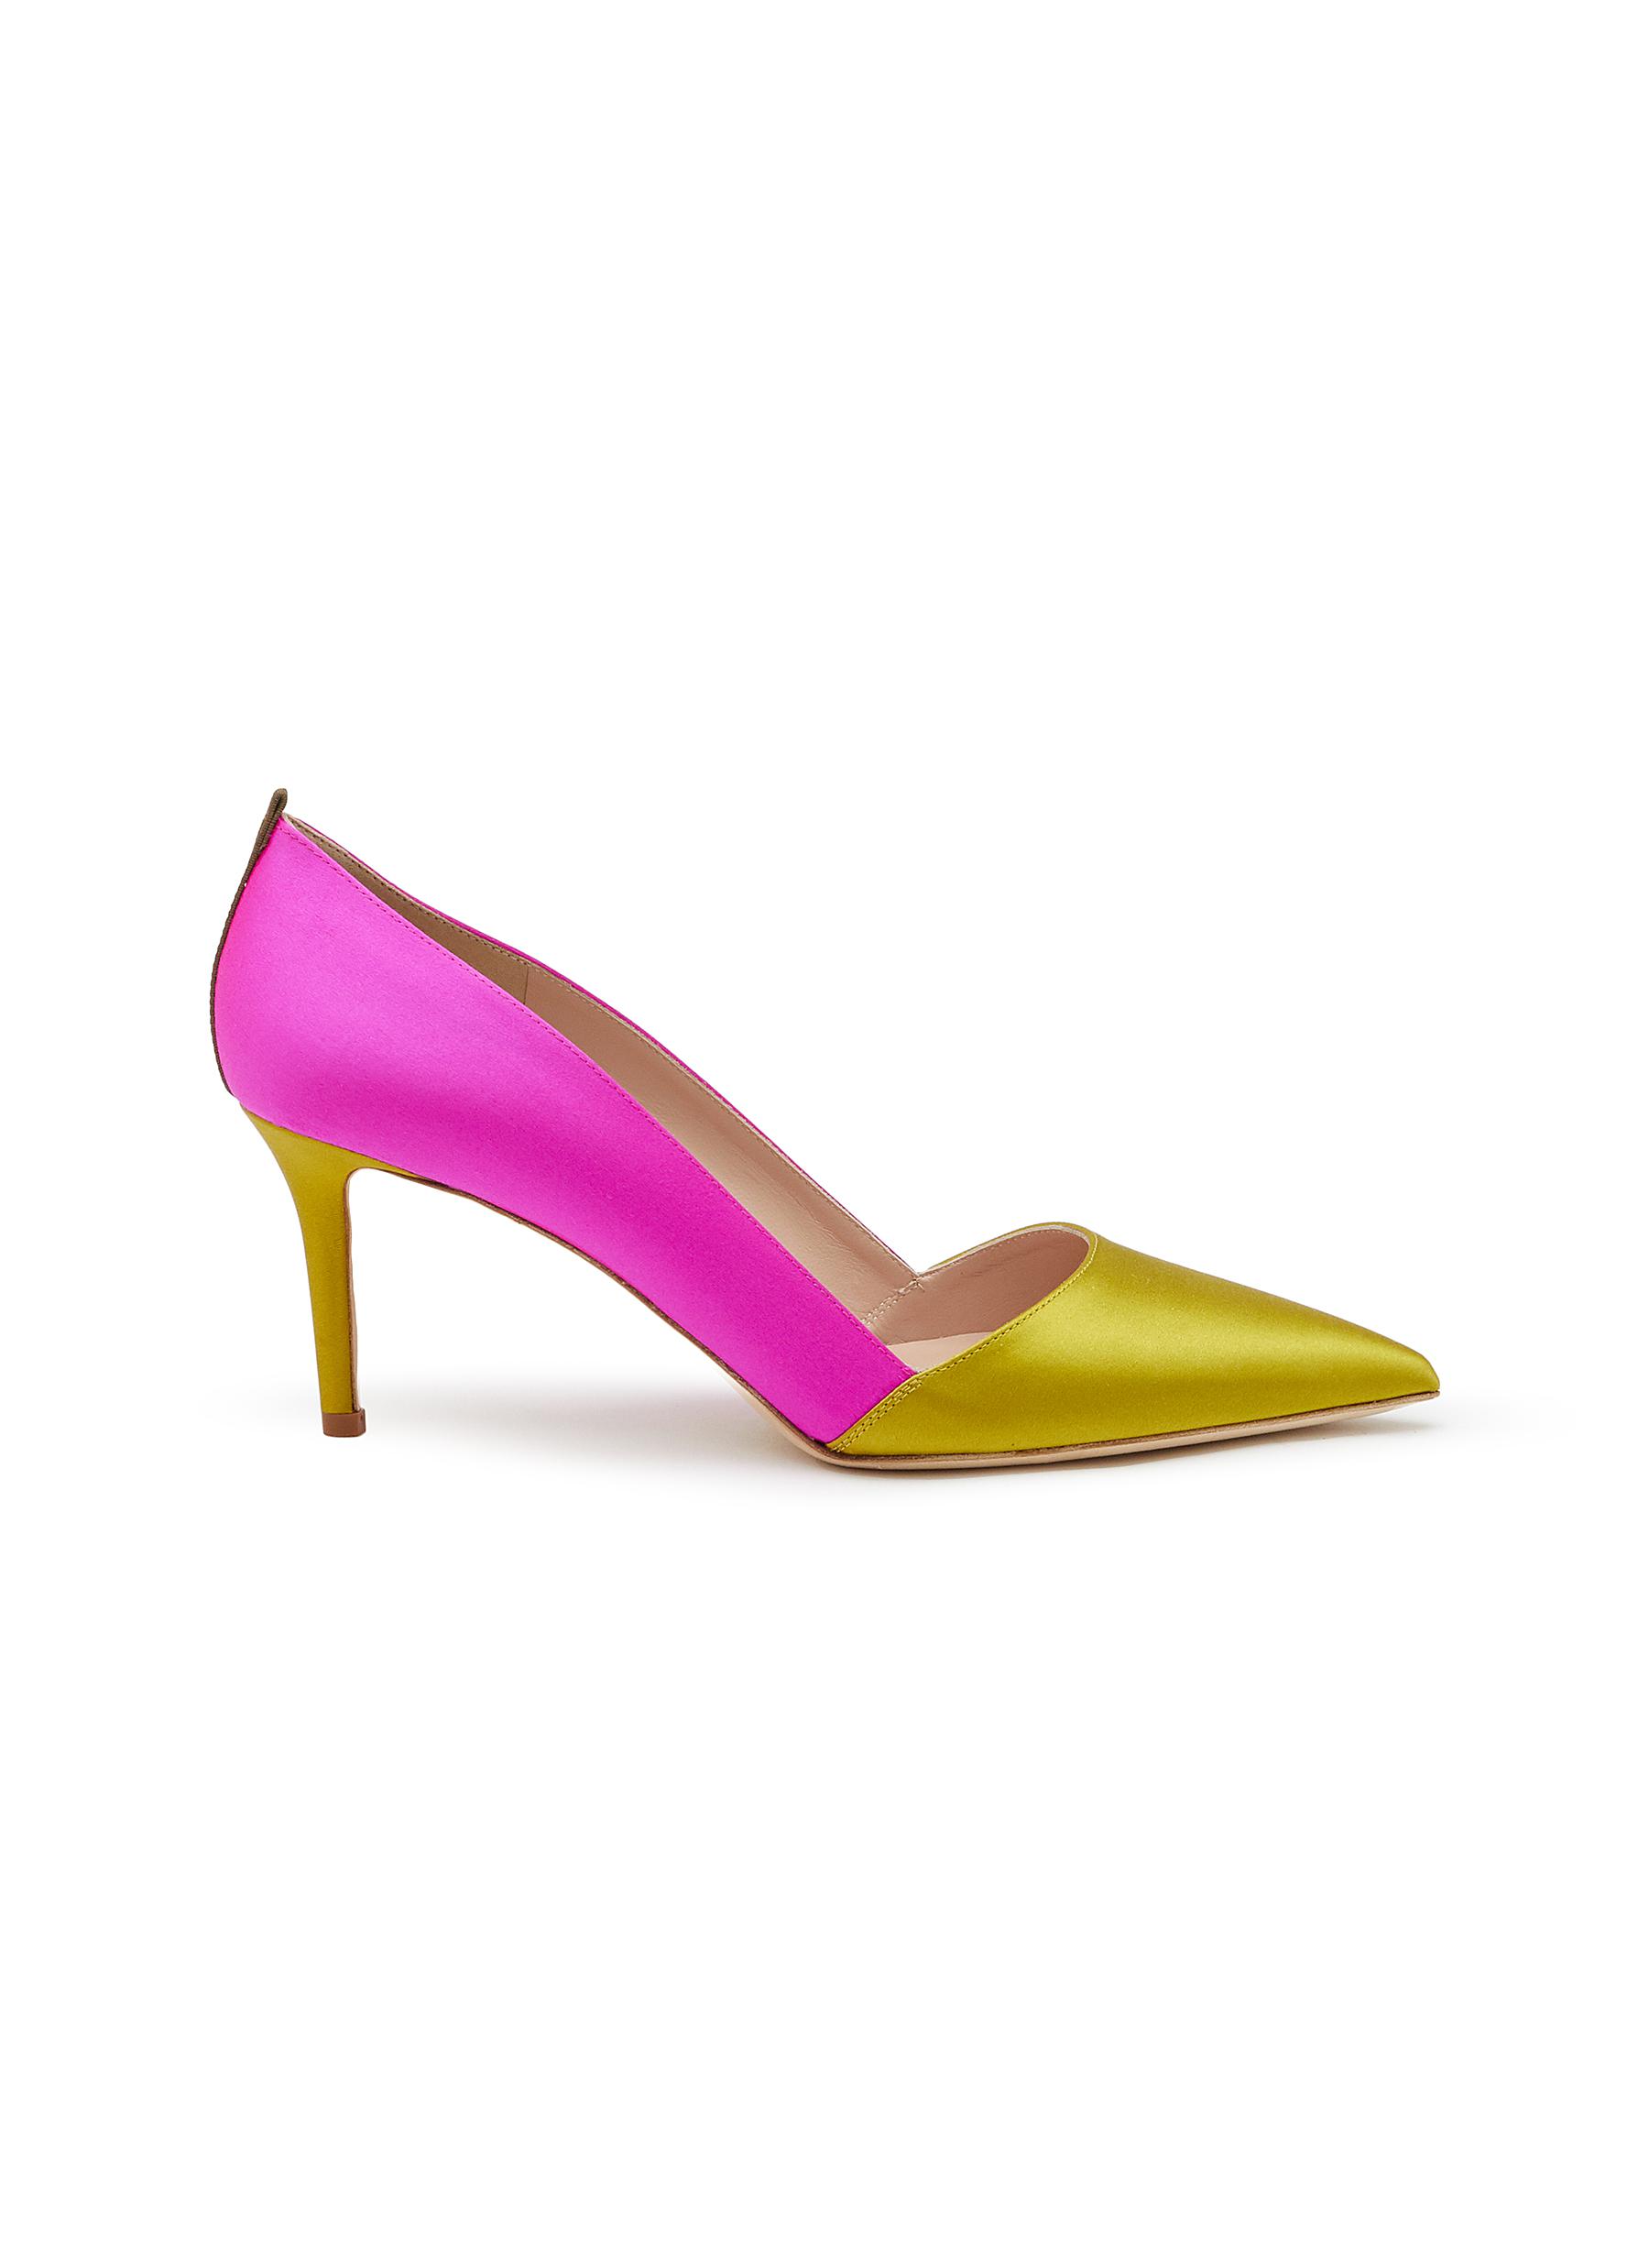 Tiyana - Black and Yellow - High Cut Strappy Stiletto Heel - Burju Shoes